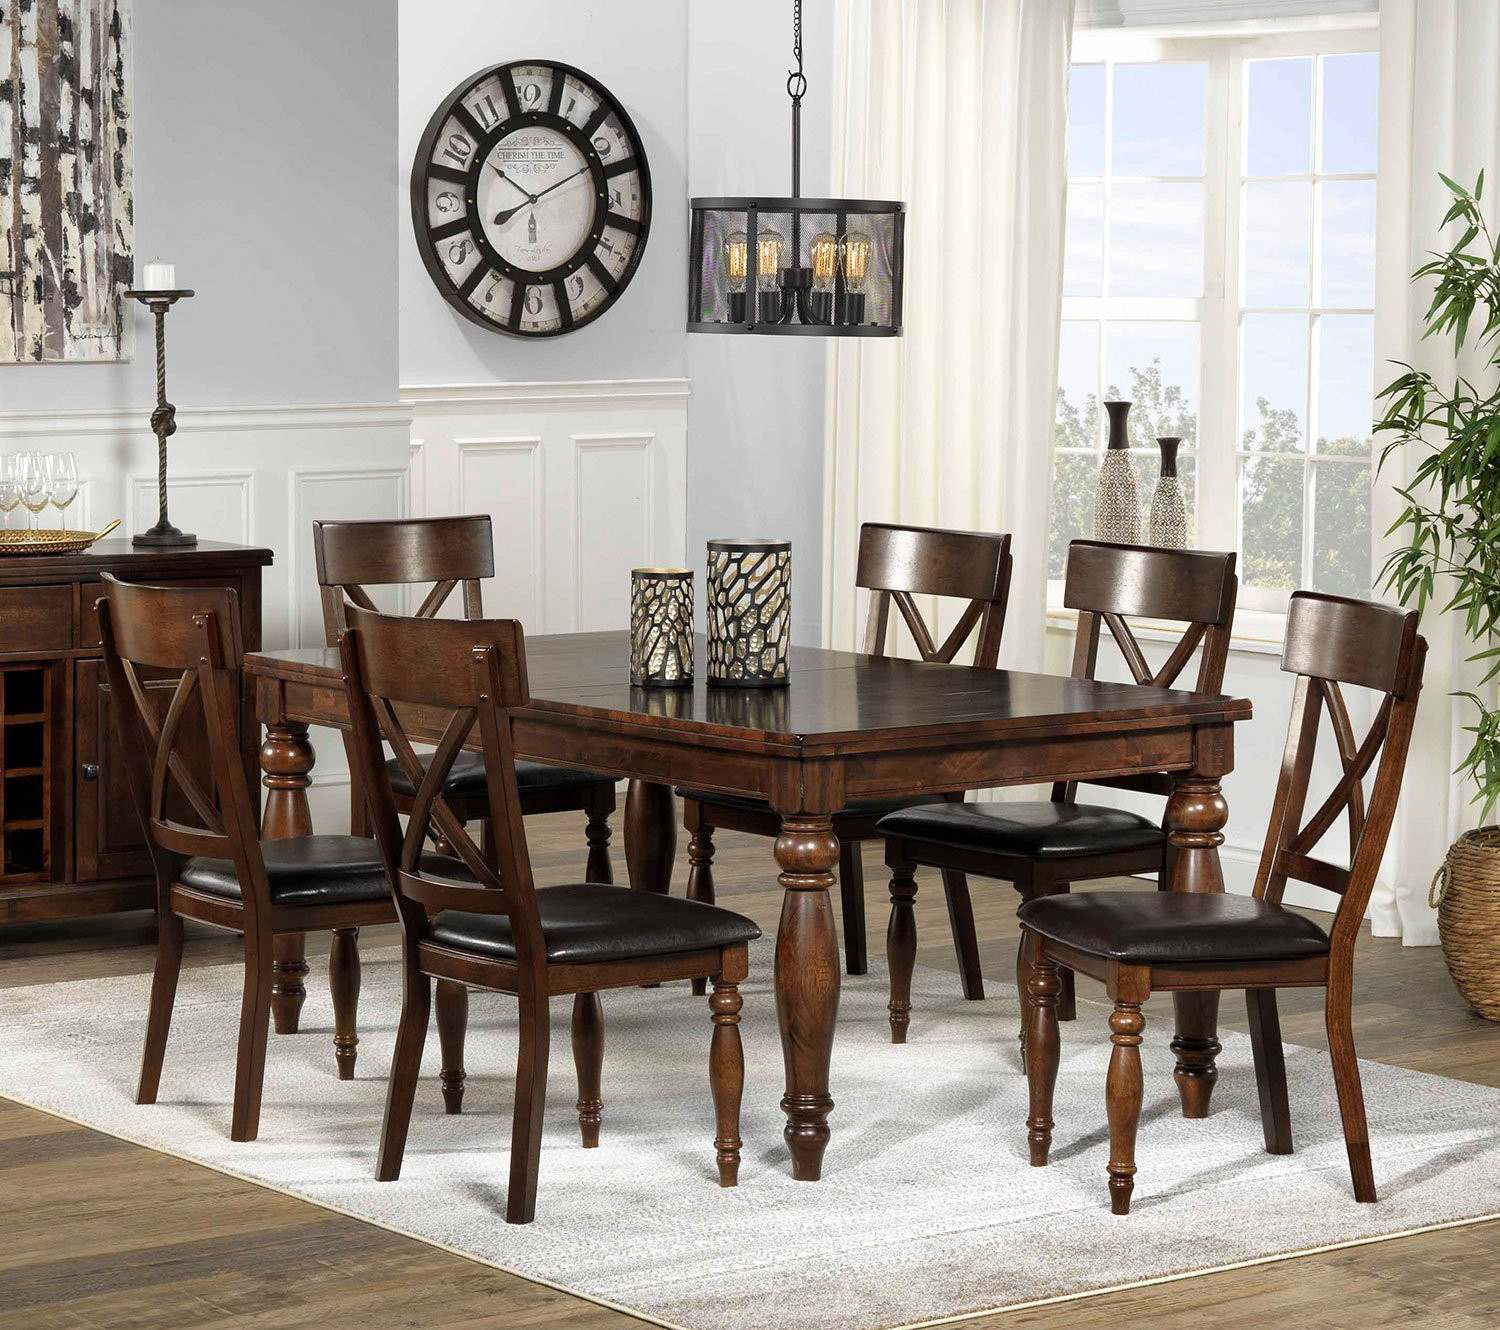 Dining Room Chairs Leons 2019 Home Design regarding measurements 1500 X 1330